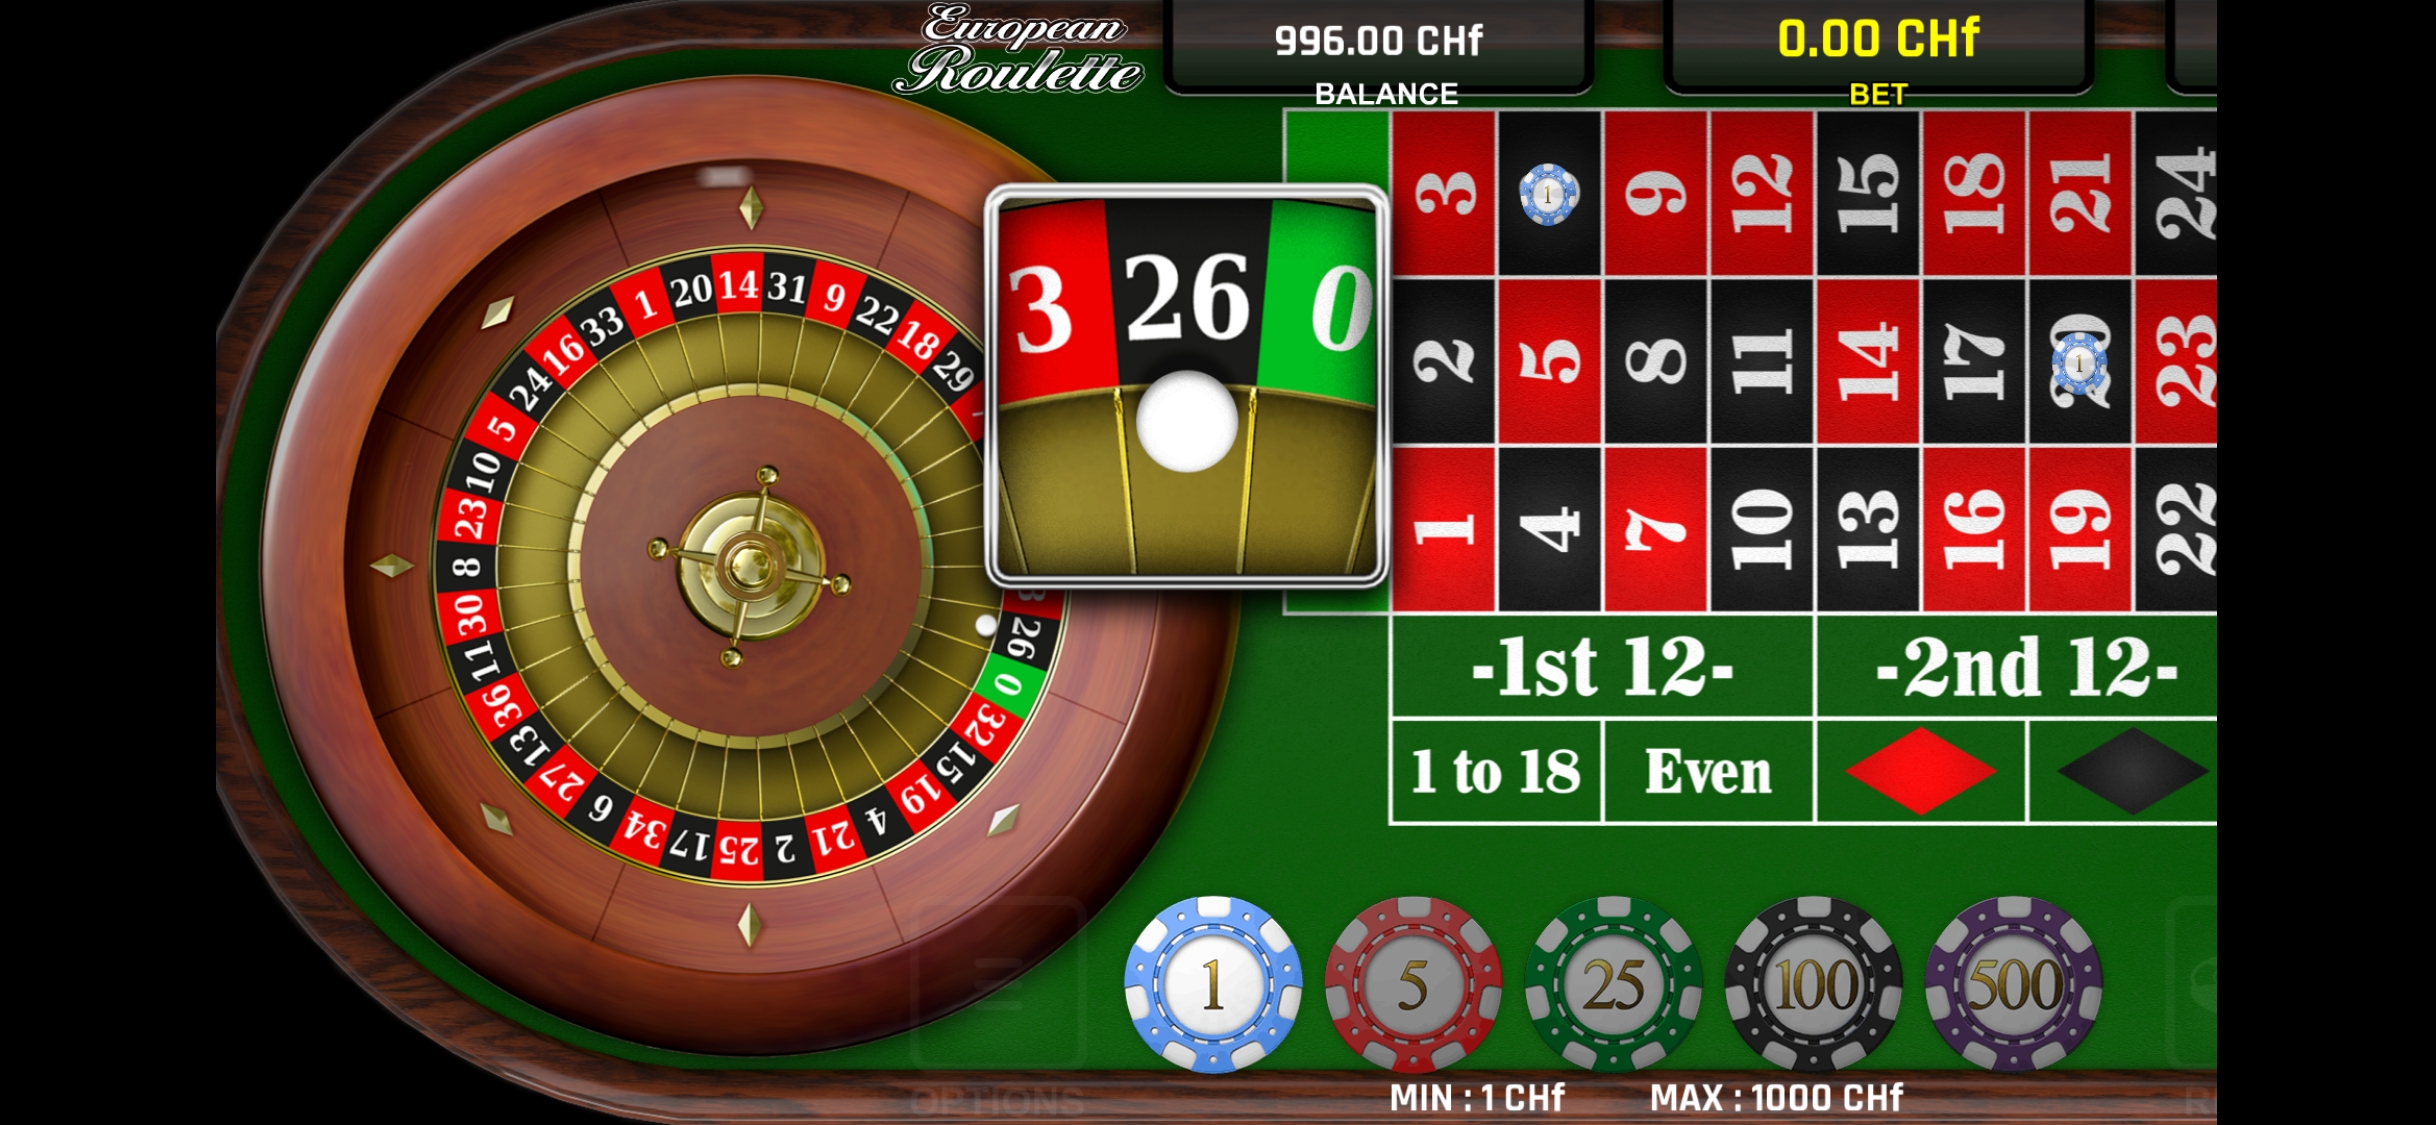 Jackpots CH Casino Mobile Casino Games Review